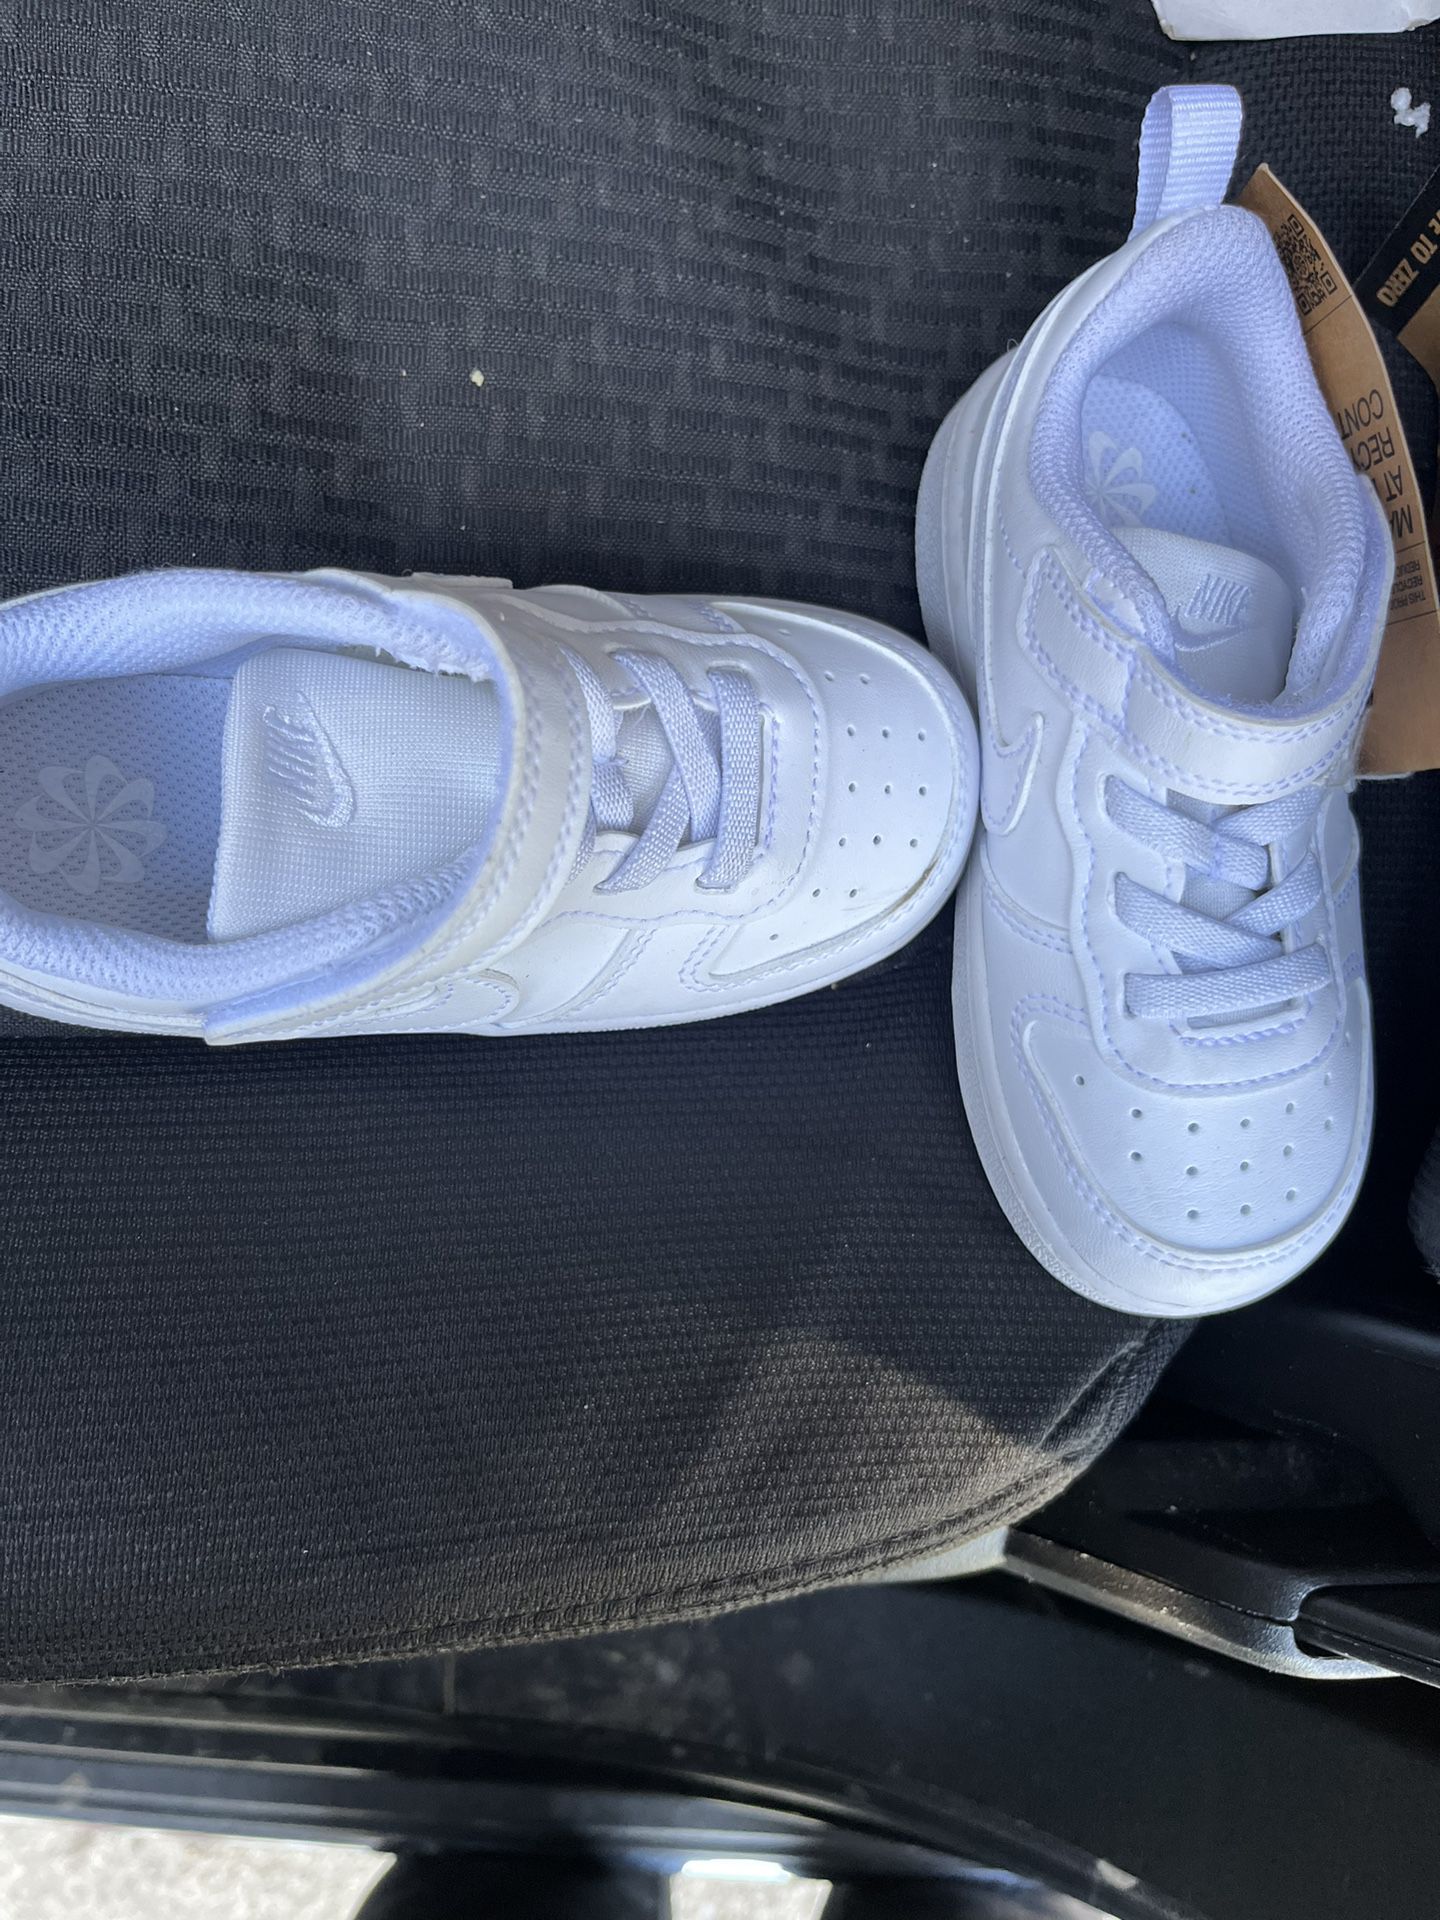 White Nike Shoes 